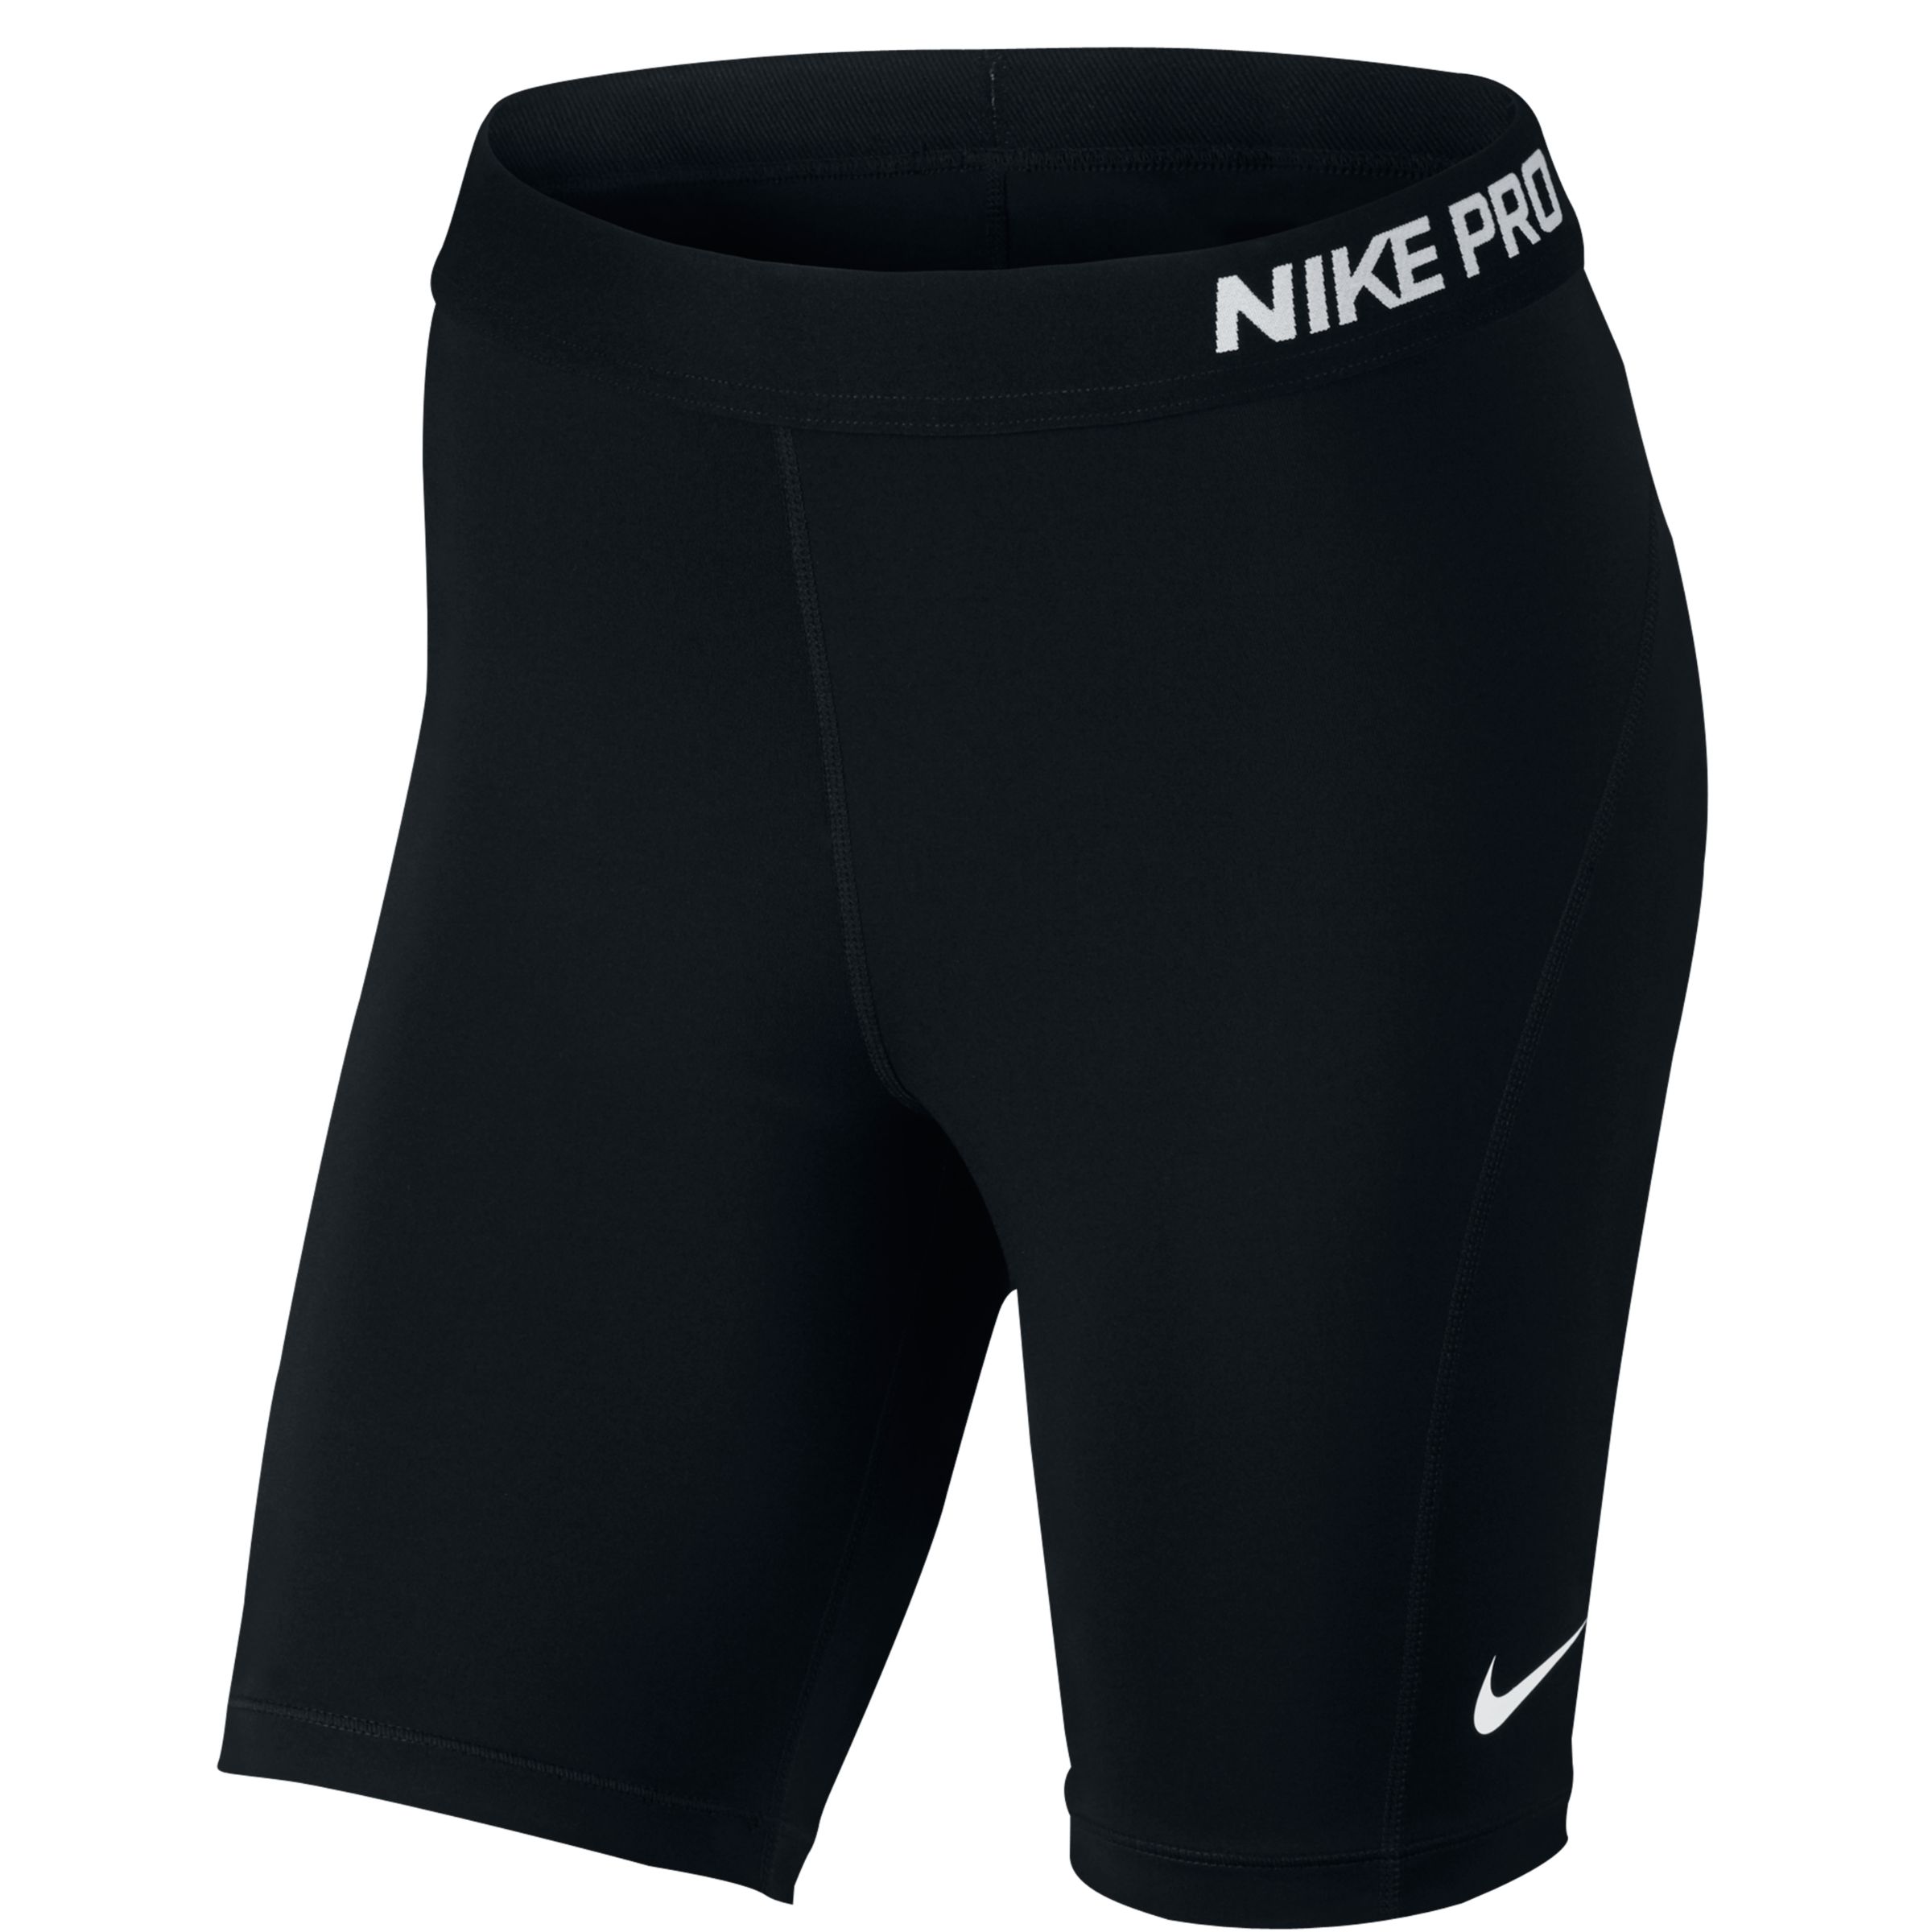 Nike Pro Cool Shorts